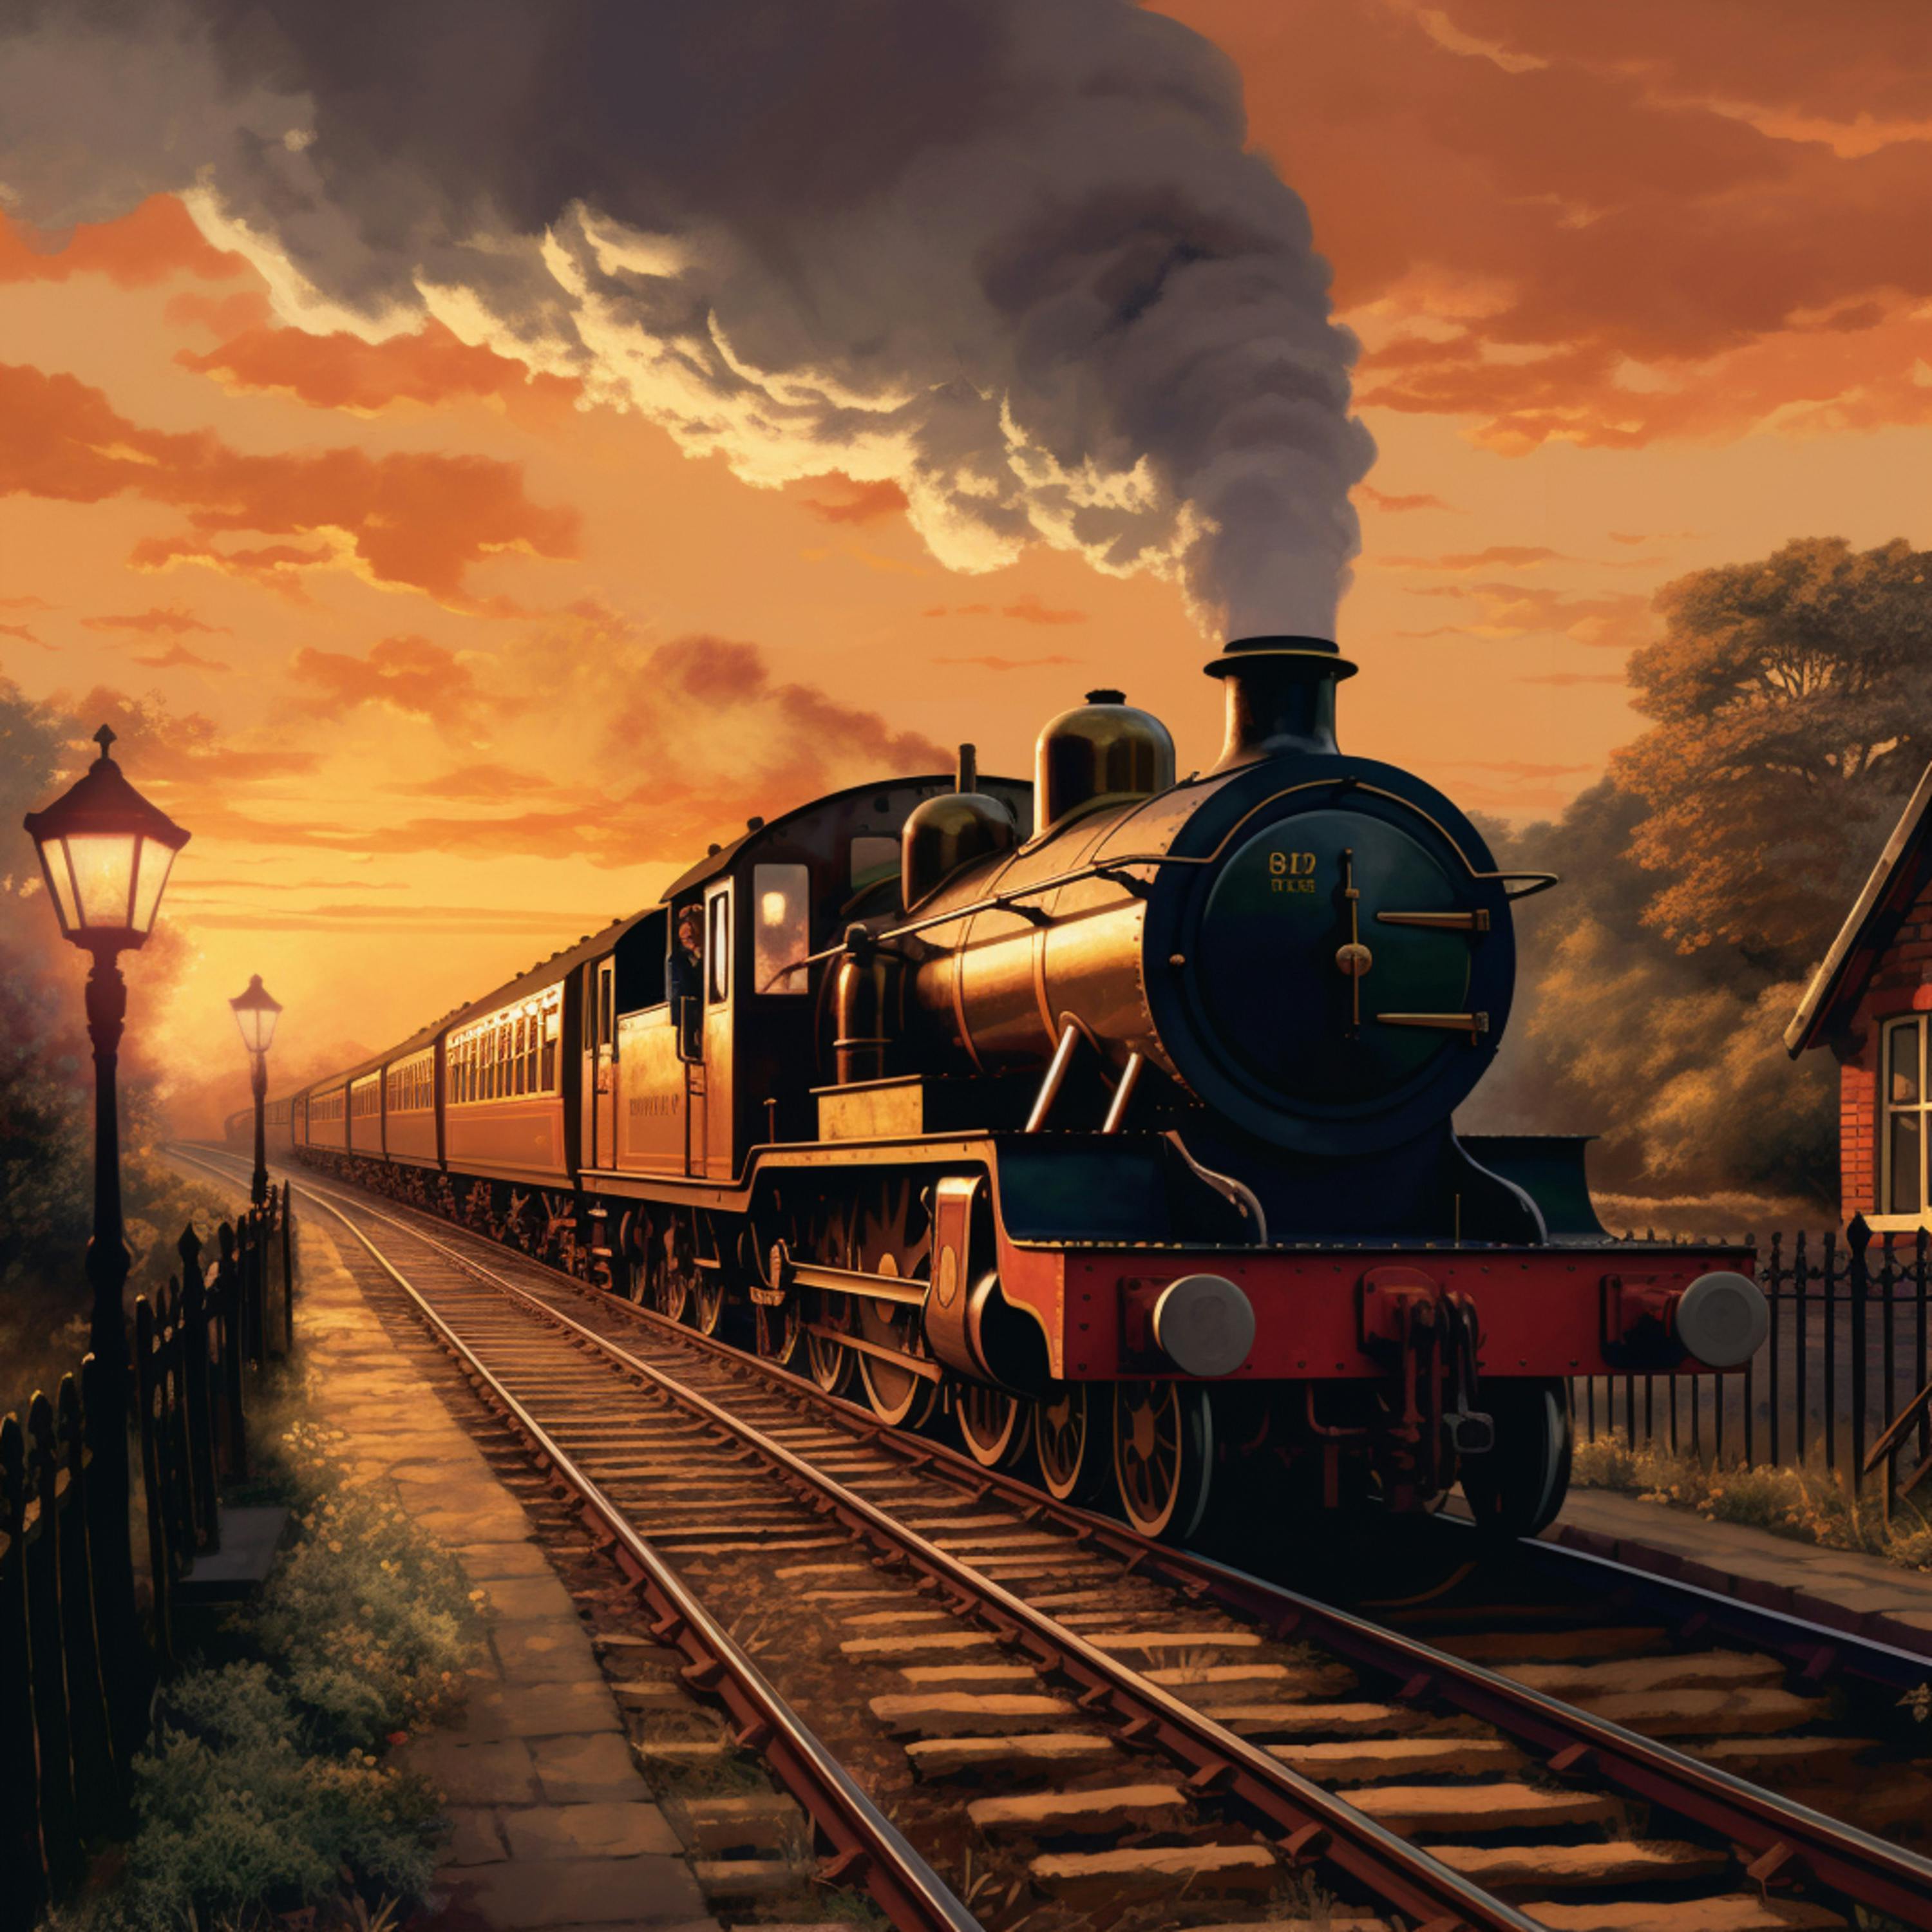 The Sleepy Train Through the 1920s English Countryside